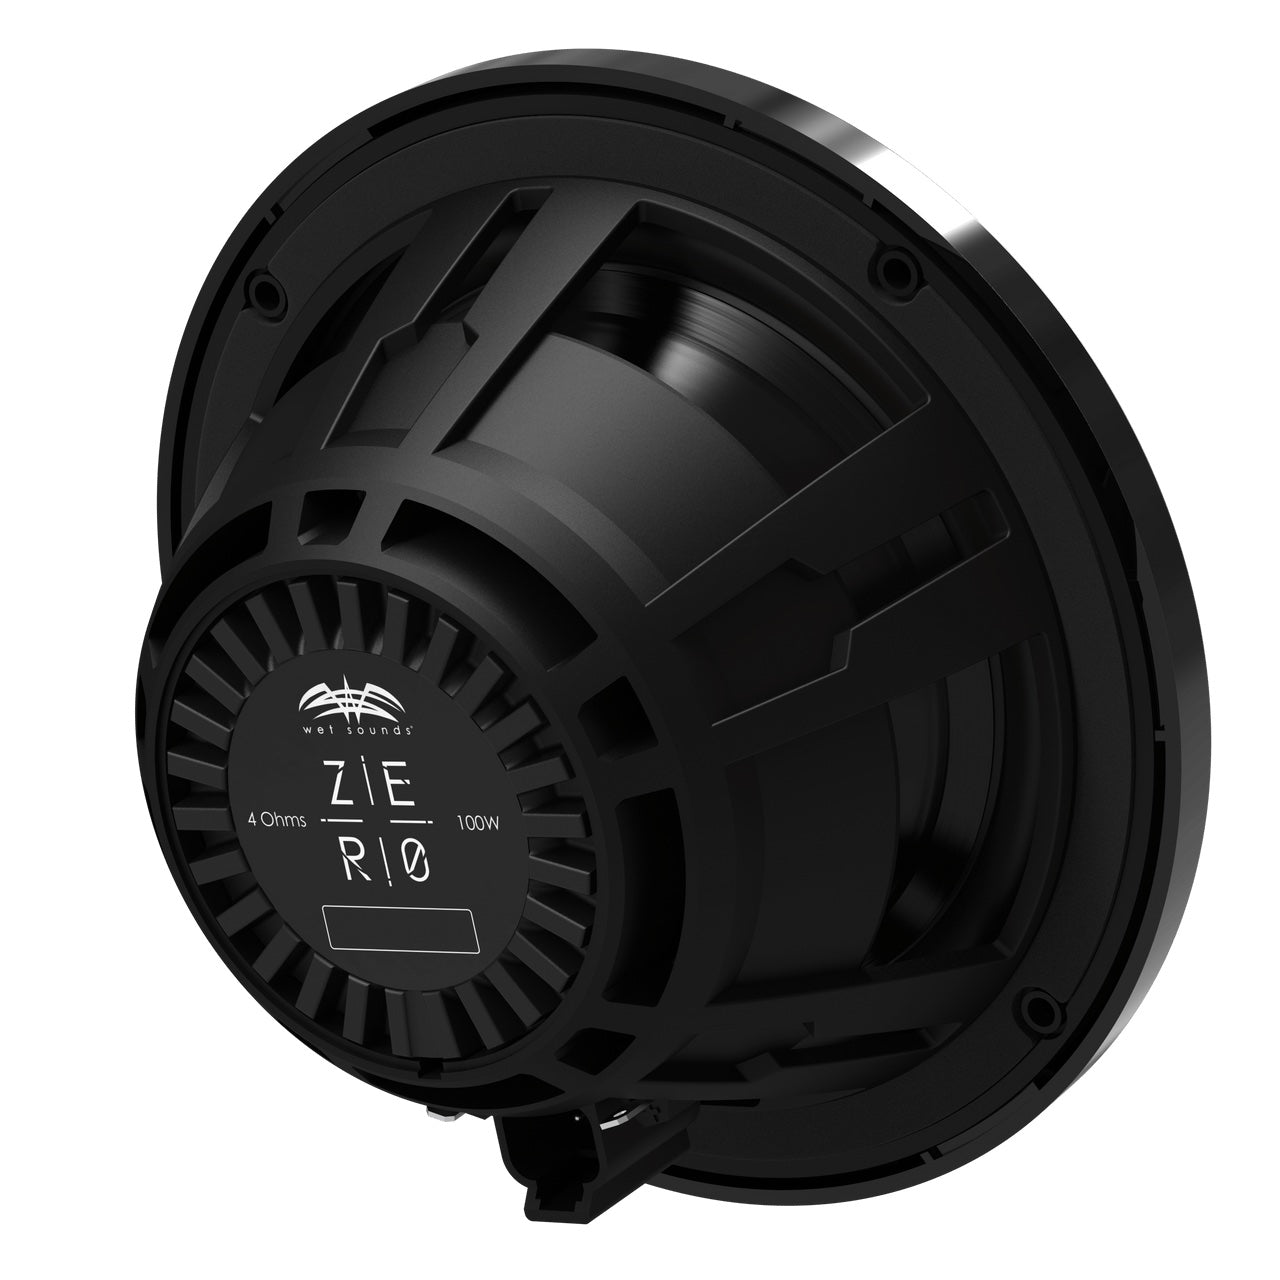 Wet Sounds ZERO 6 XZ-B | High-Output 6.5" Marine Coaxial Speakers